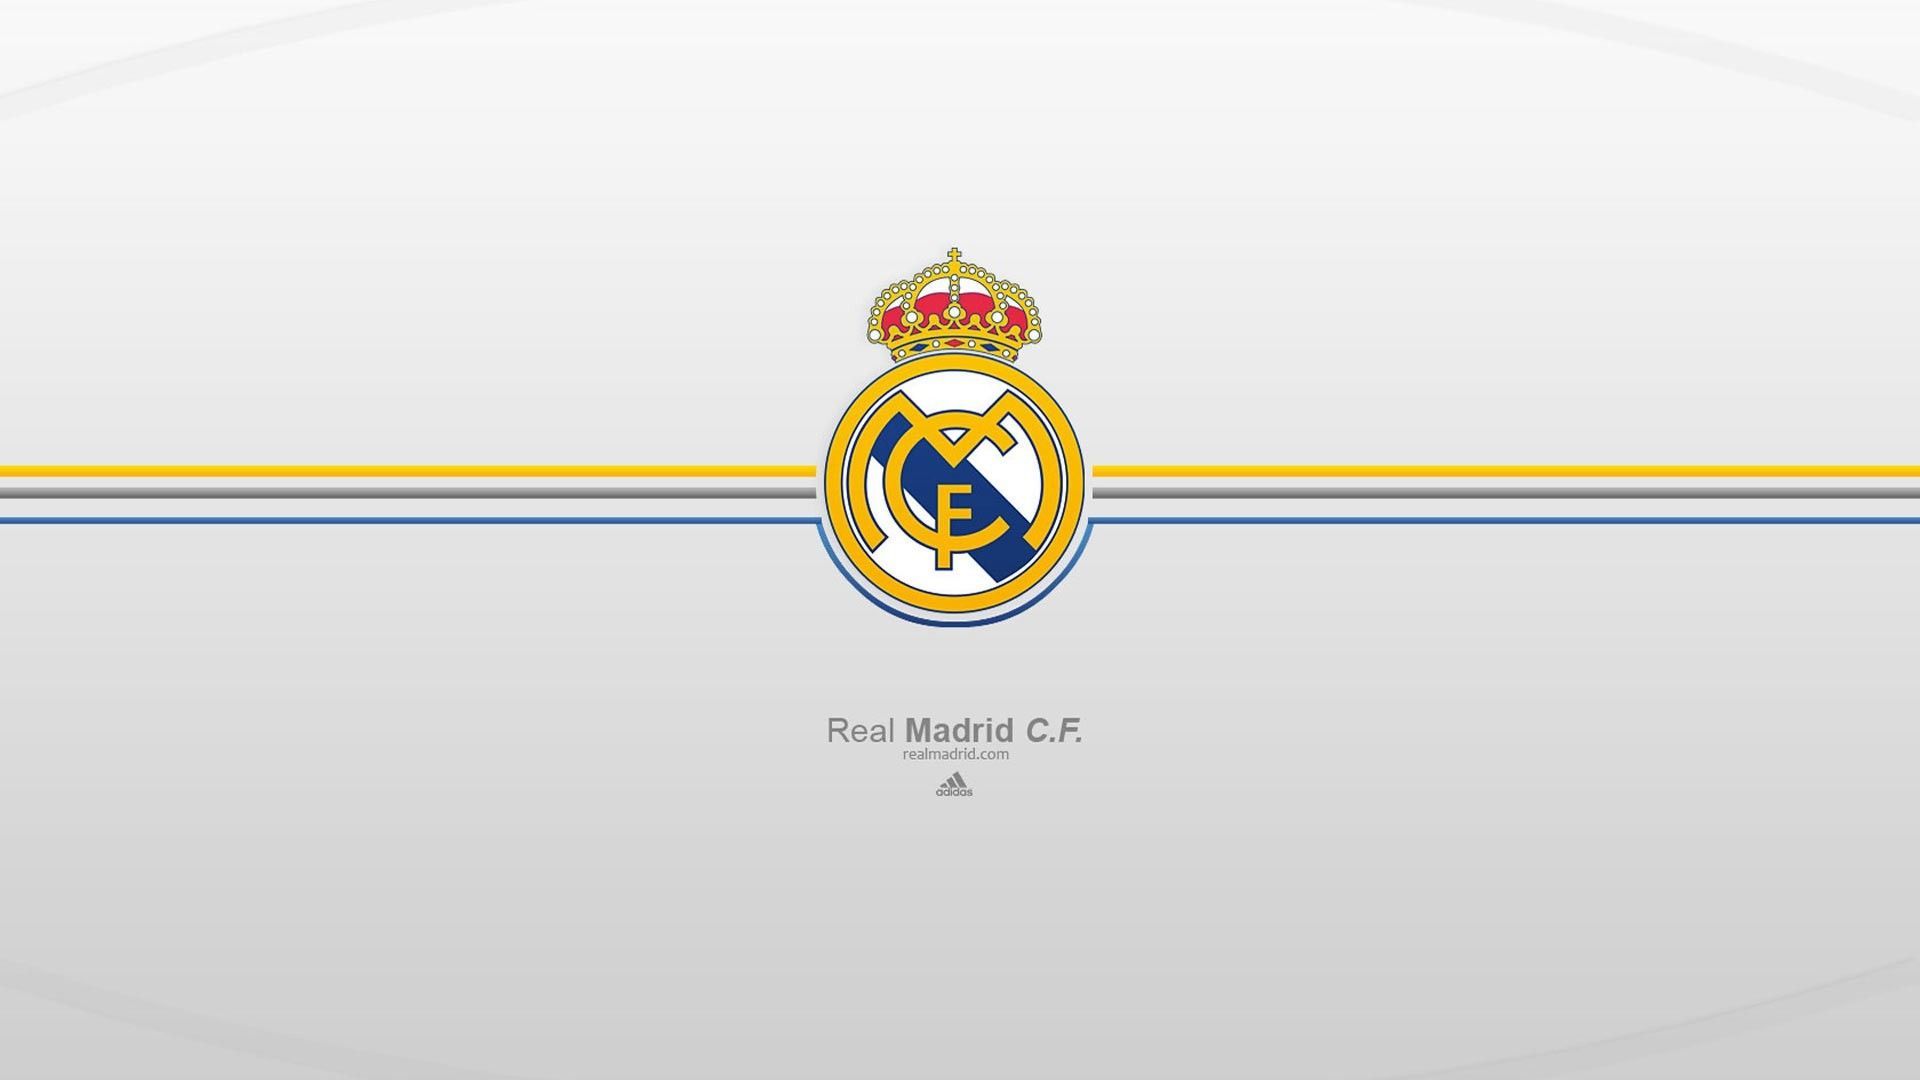 Real Madrid Logo Wallpaper HD Widescreen. Real madrid wallpaper, Madrid wallpaper, Real madrid logo